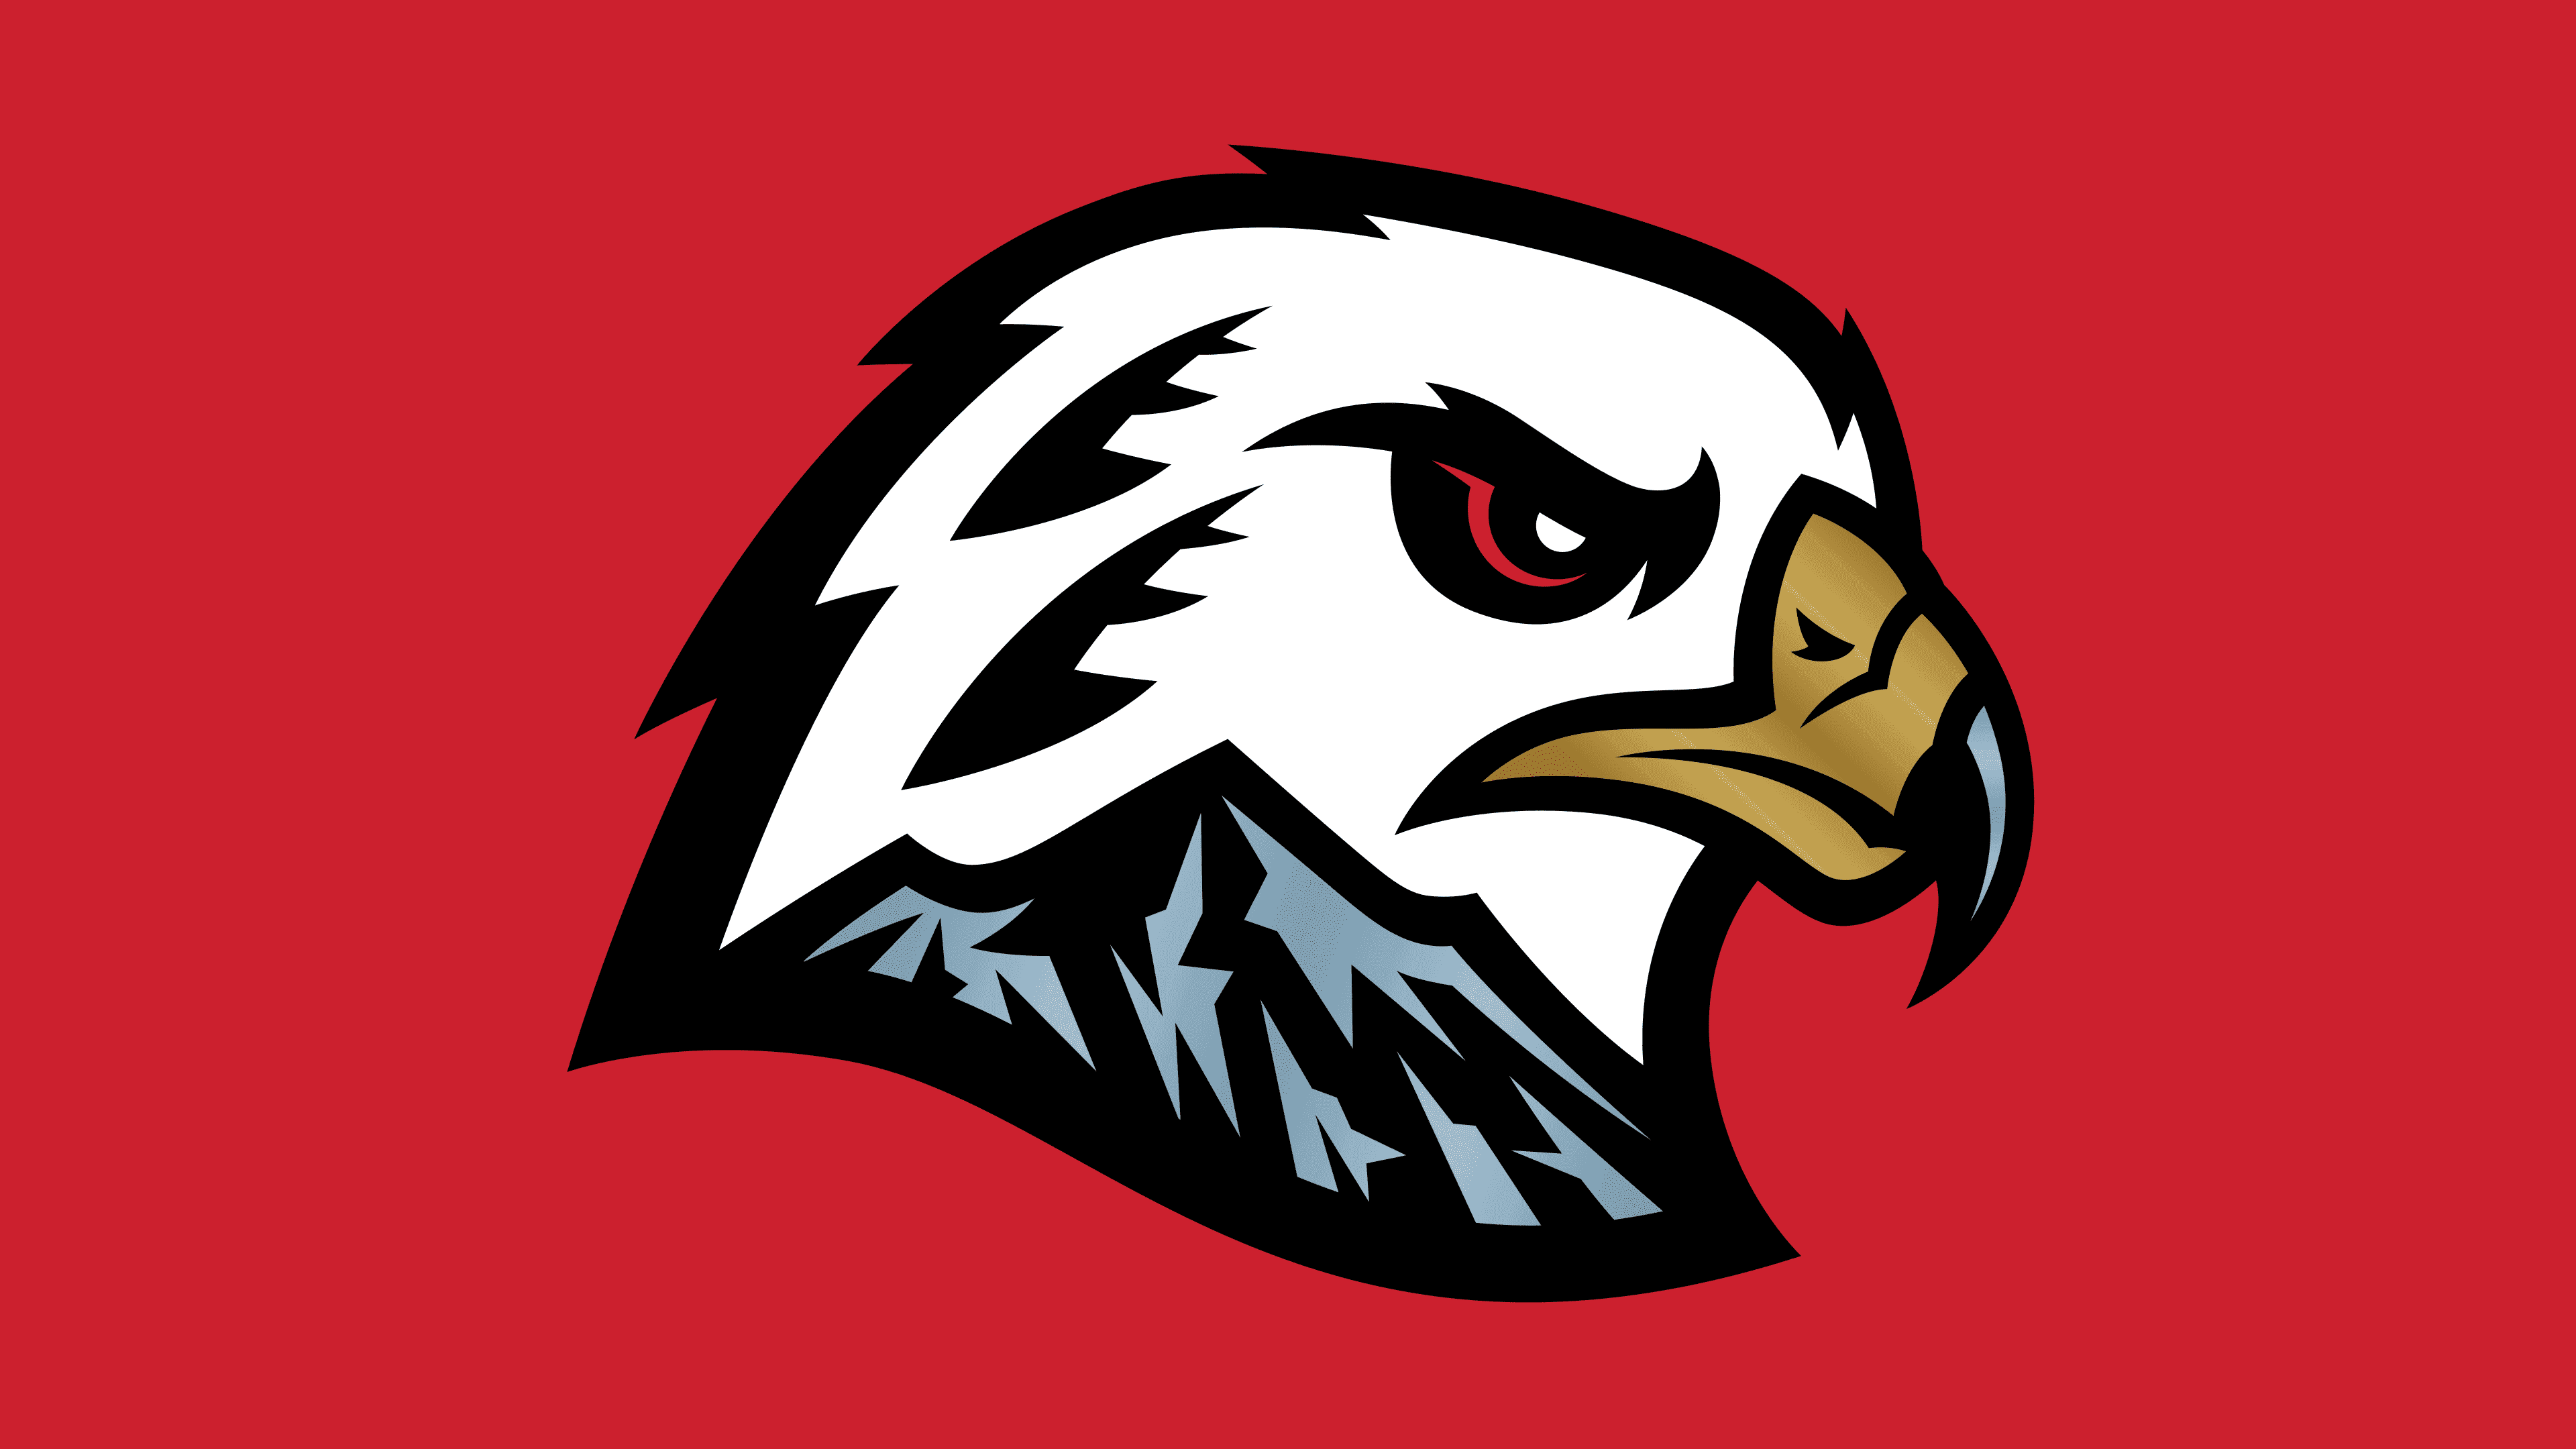 Portland Winterhawks adopt new logo, drop native imagery